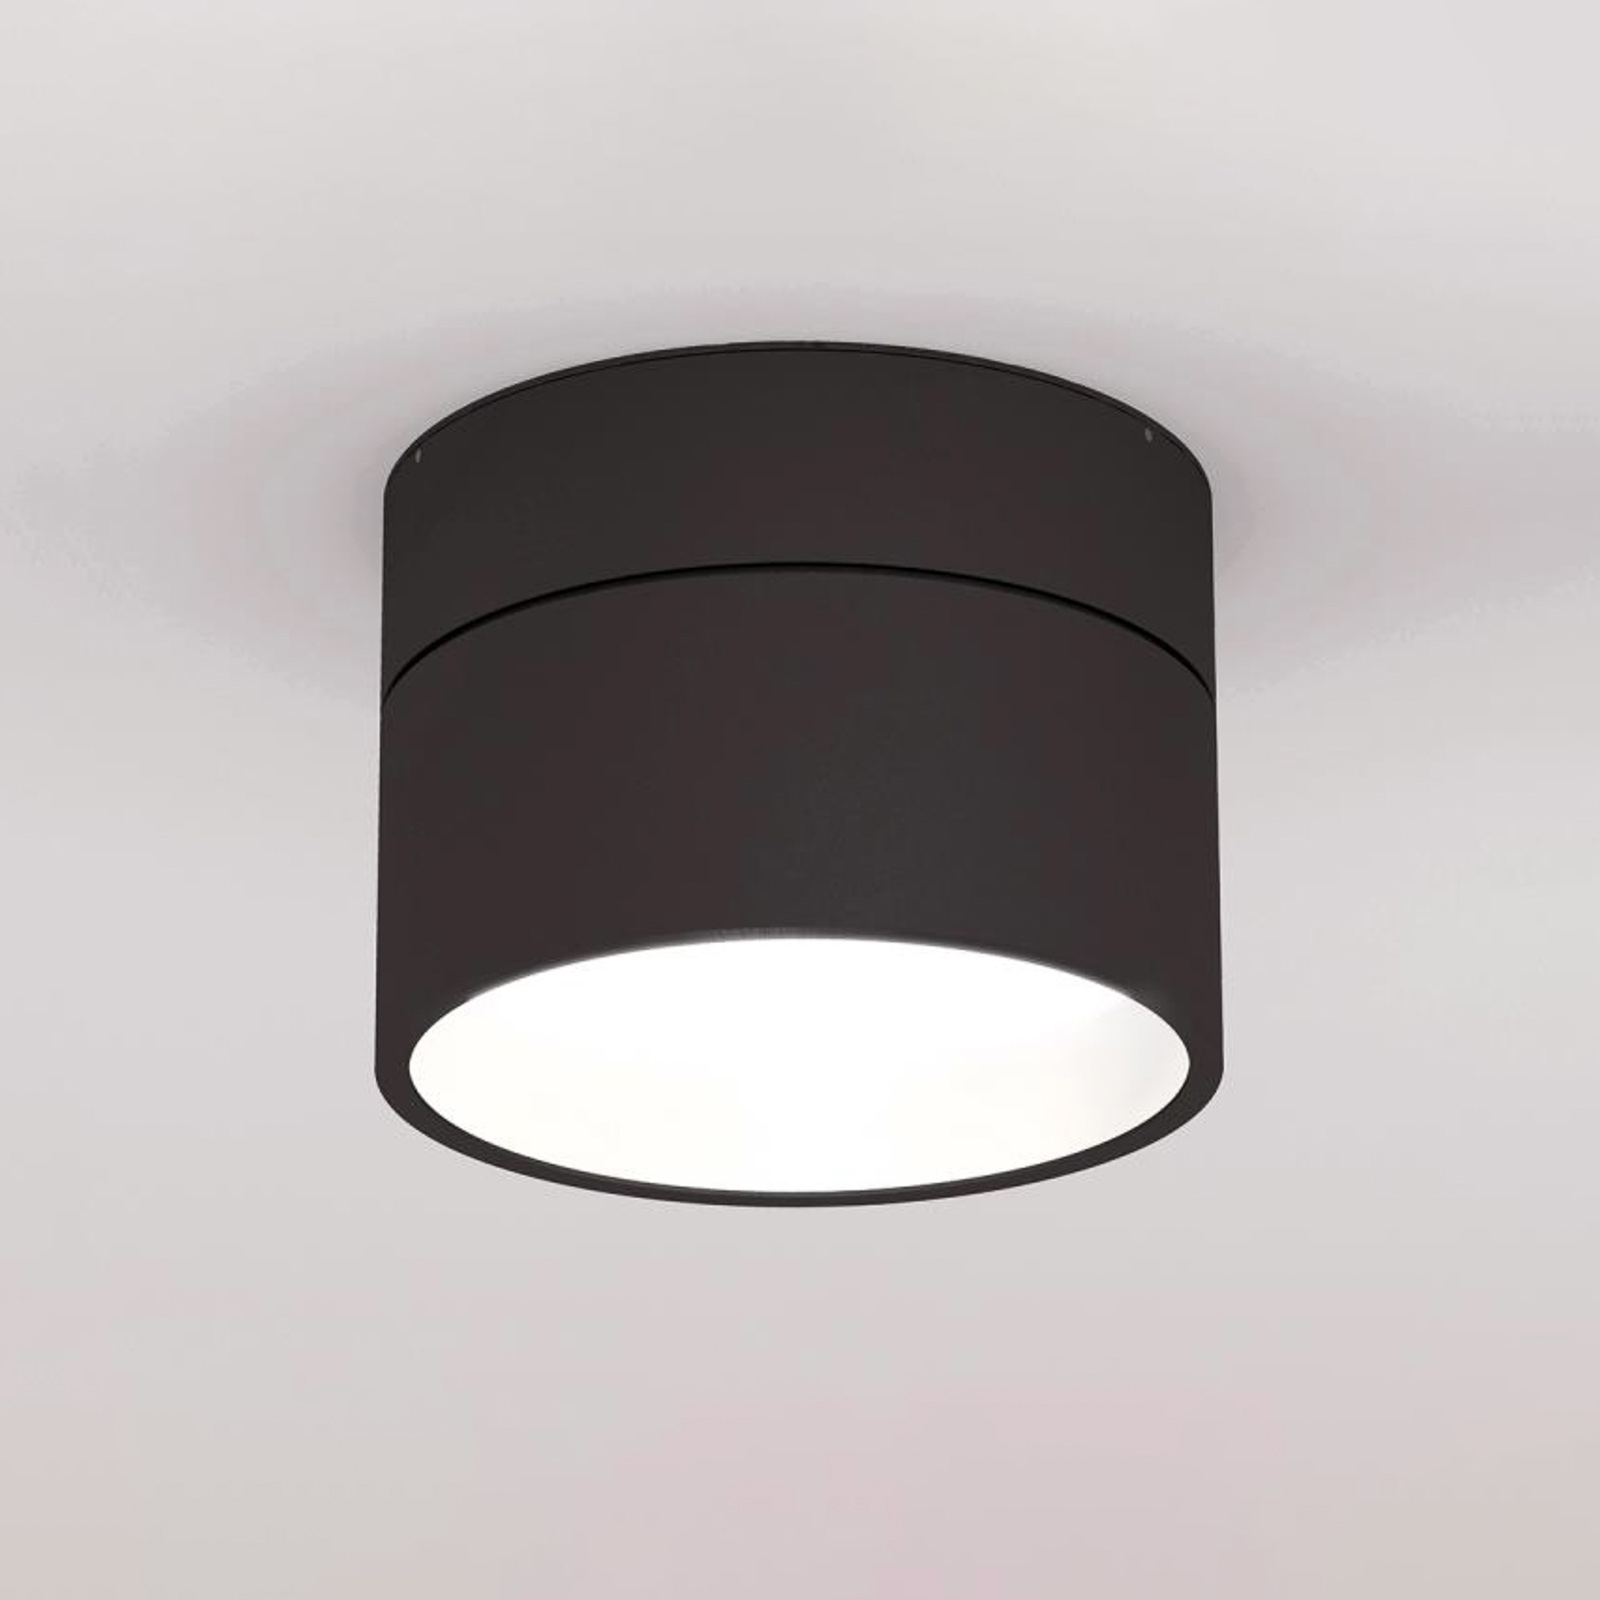 Turn on lampa sufitowa Dime LED 2700K czarno-biała